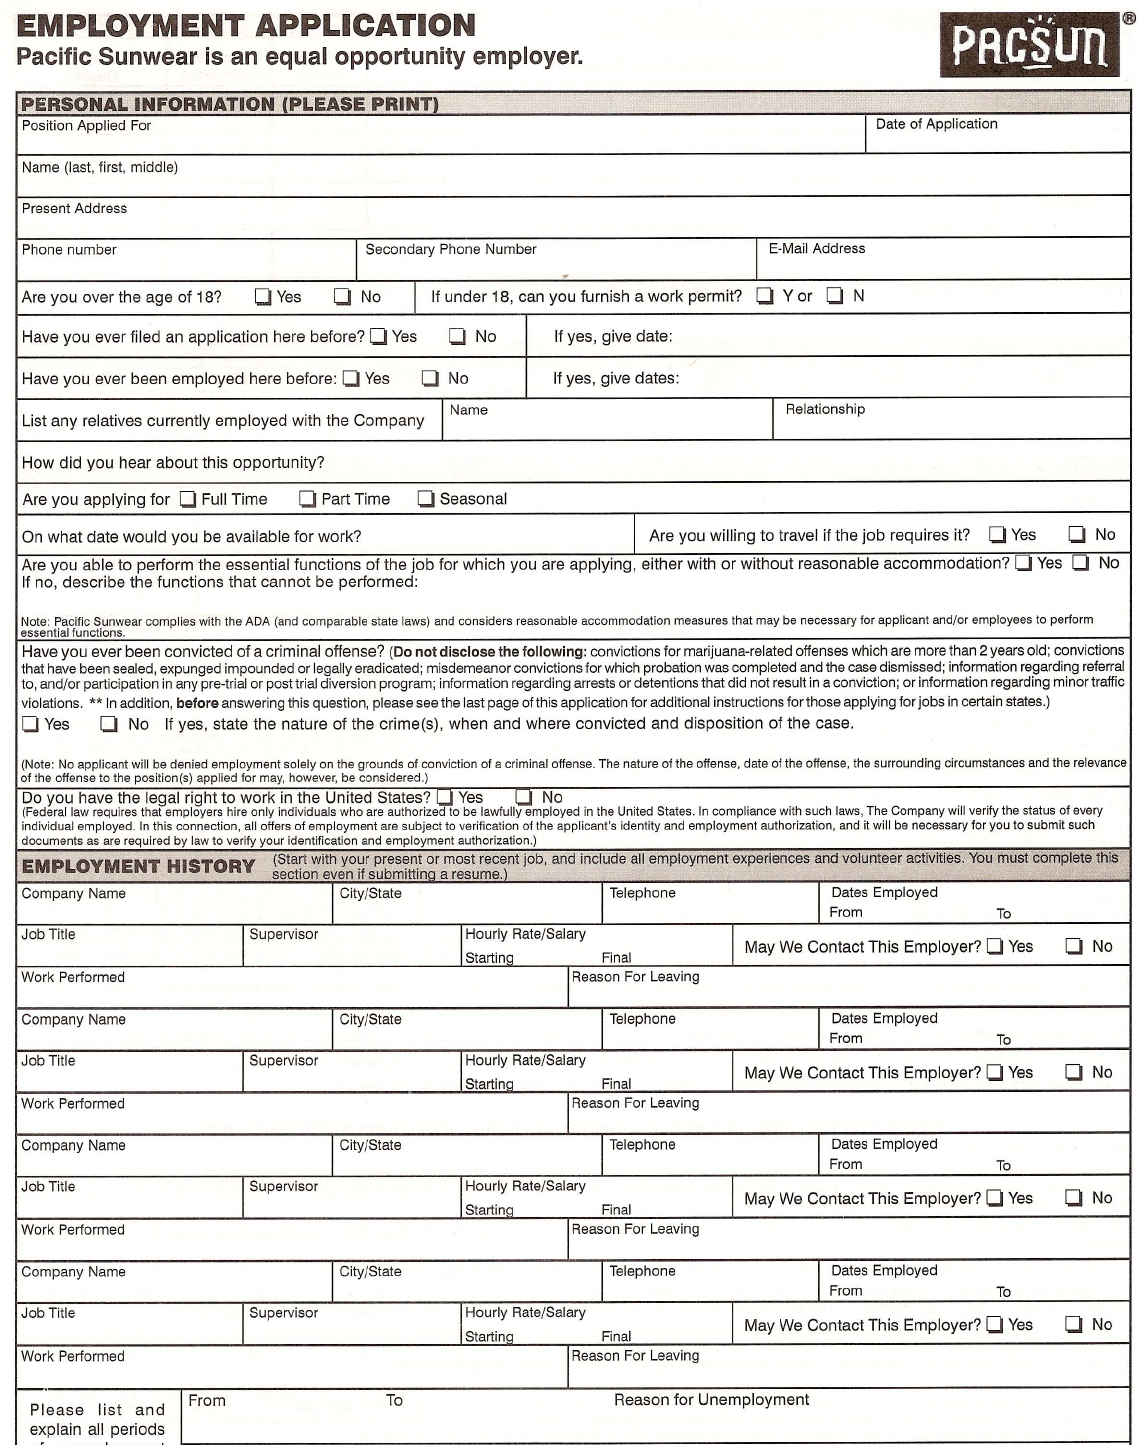 Free Printable Pacsun Job Application Form - Free Printable Job Application Form Pdf